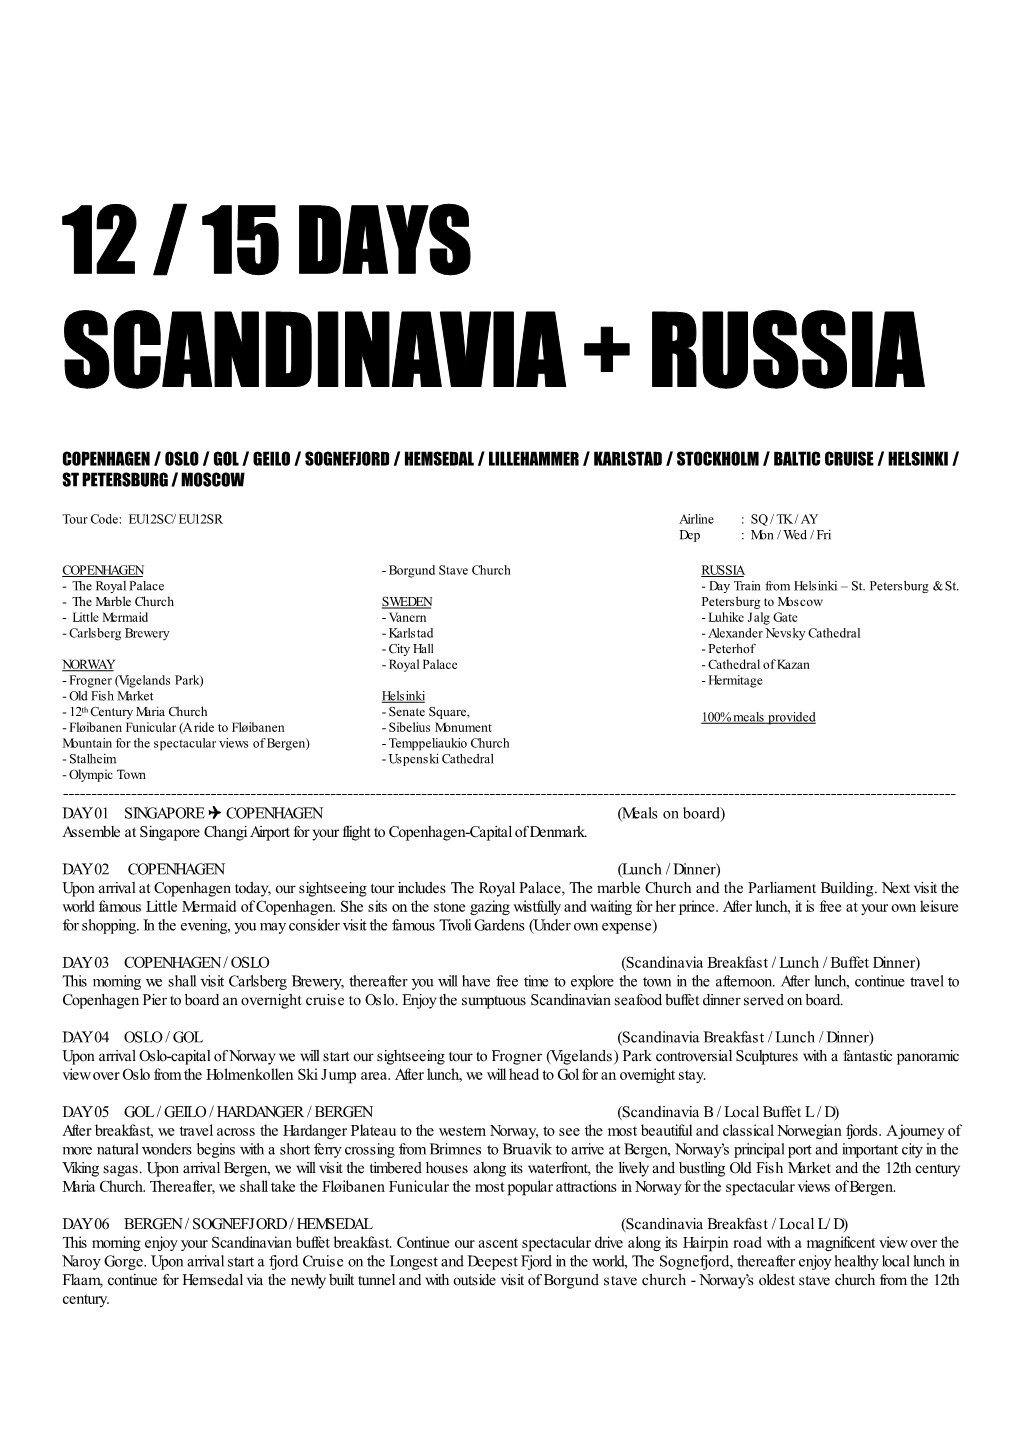 Scandinavia + Russia